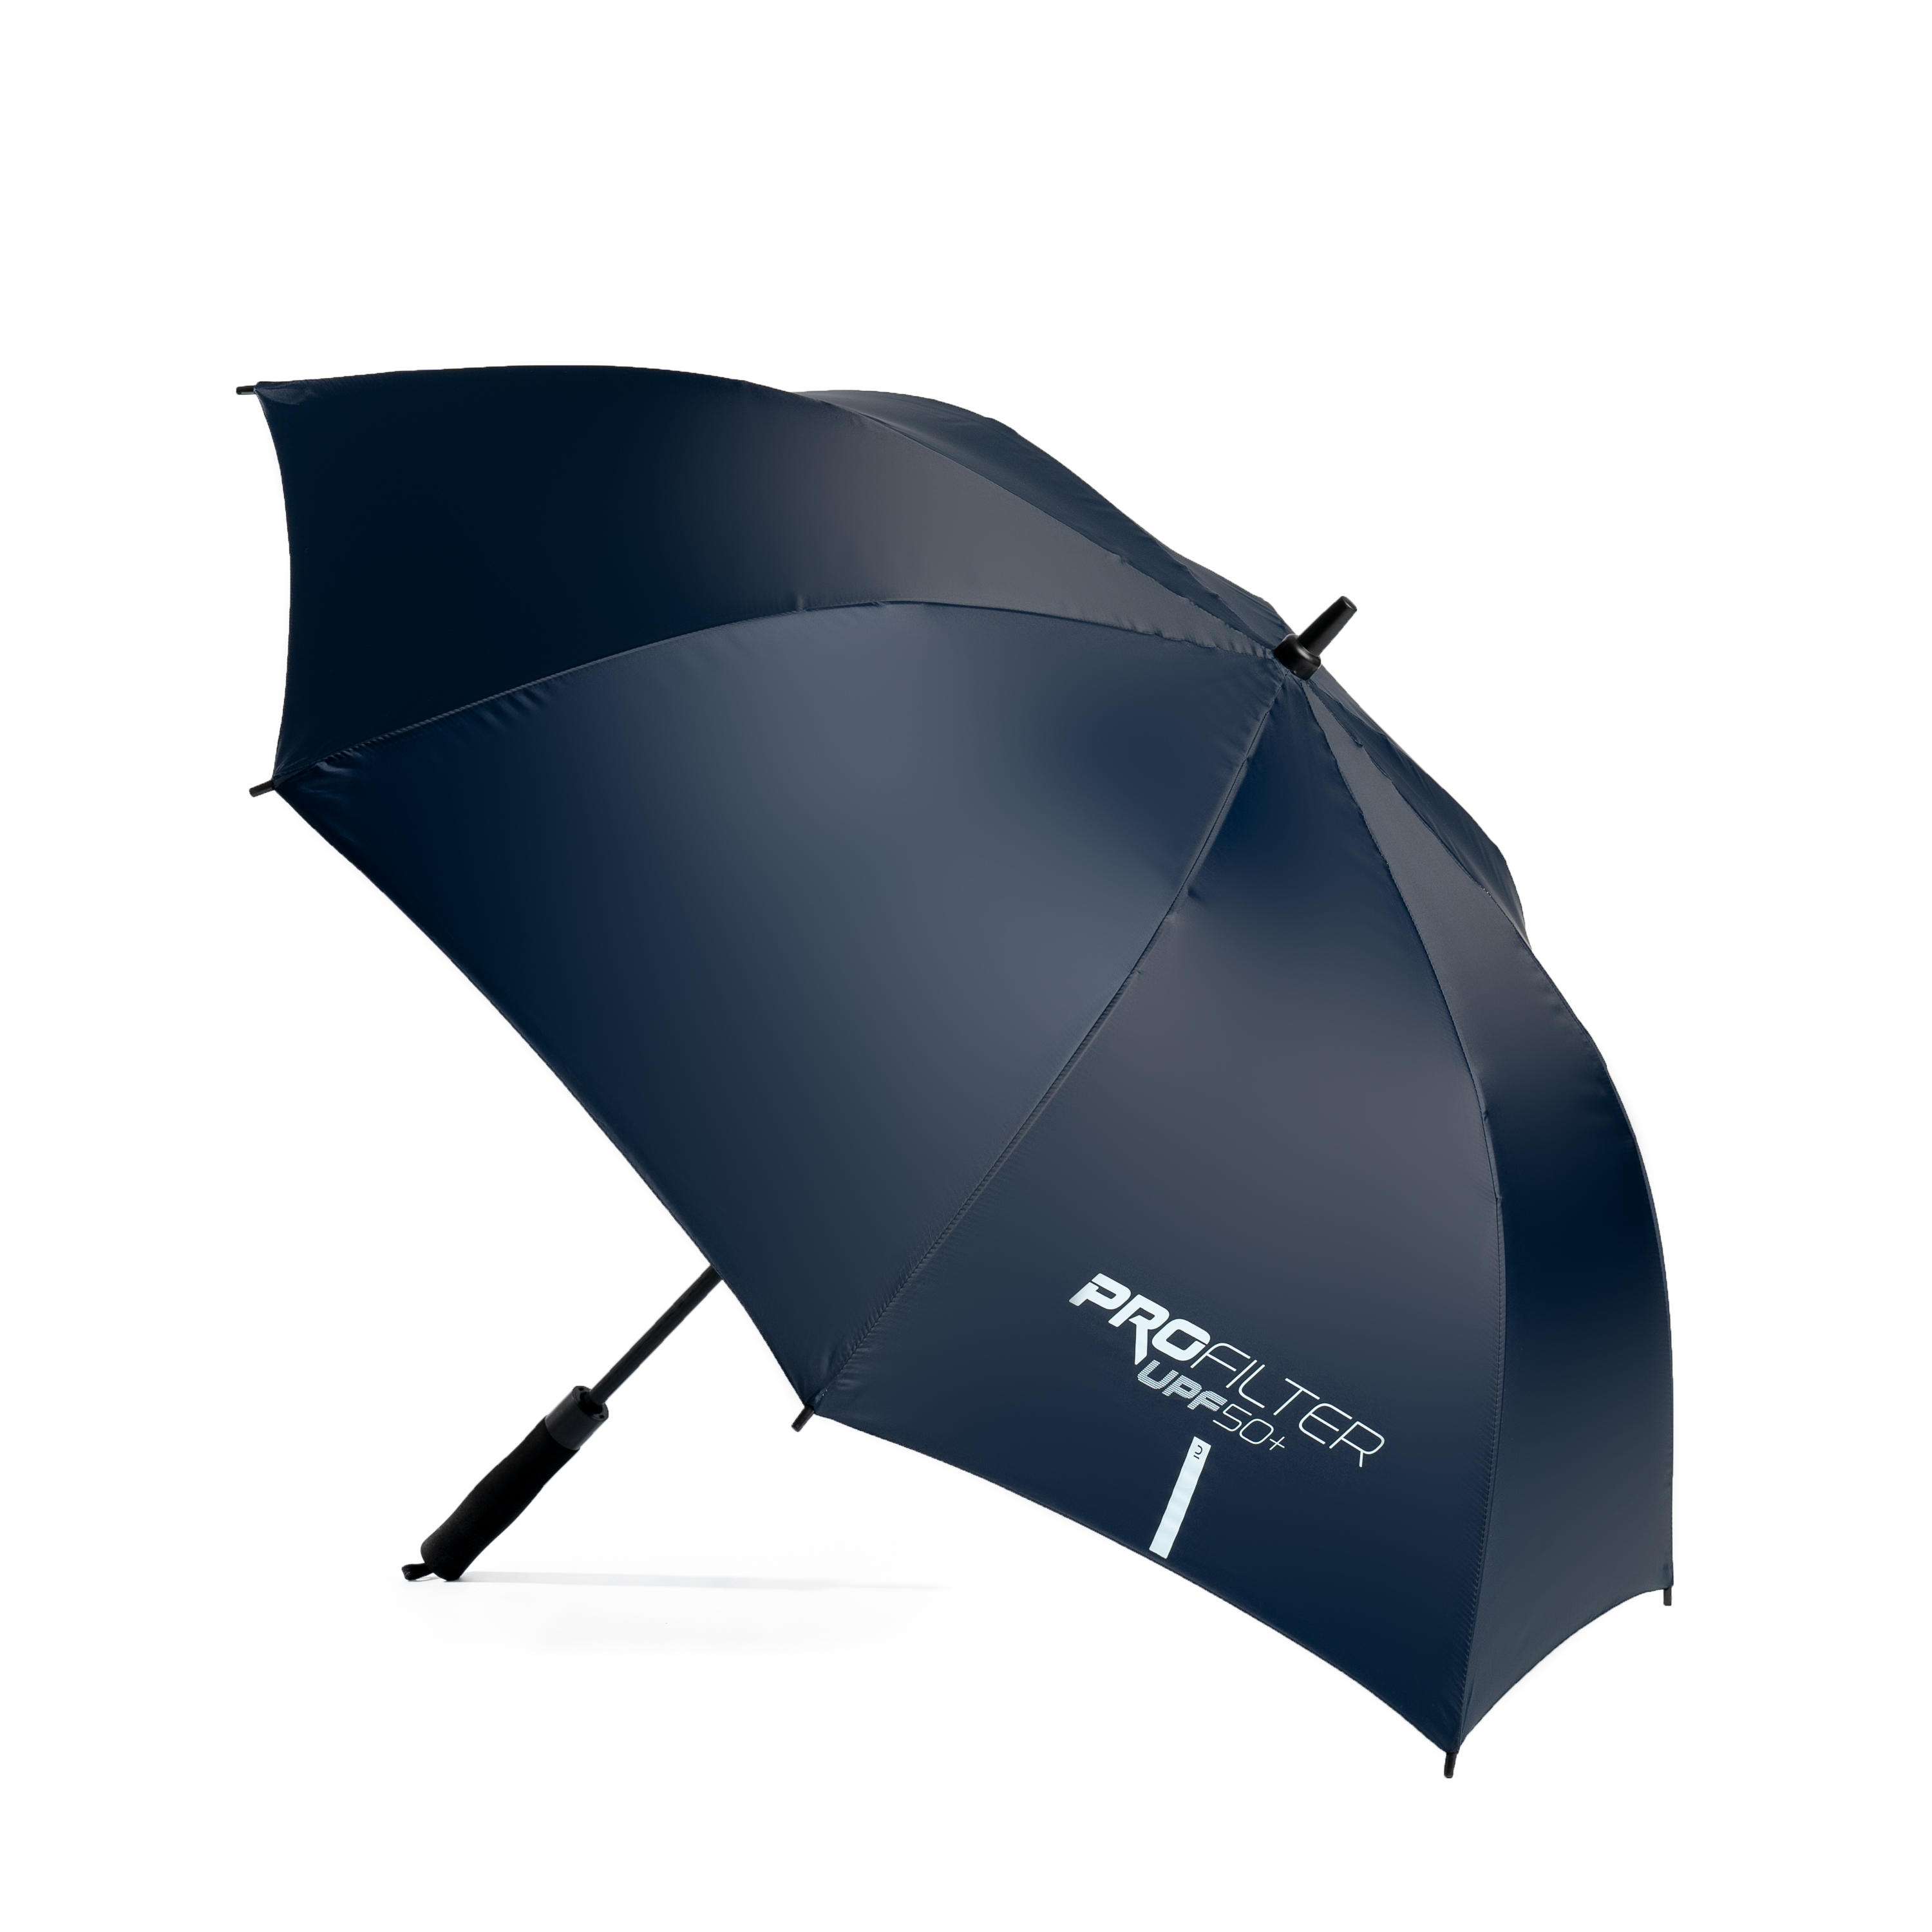 decathlon umbrella